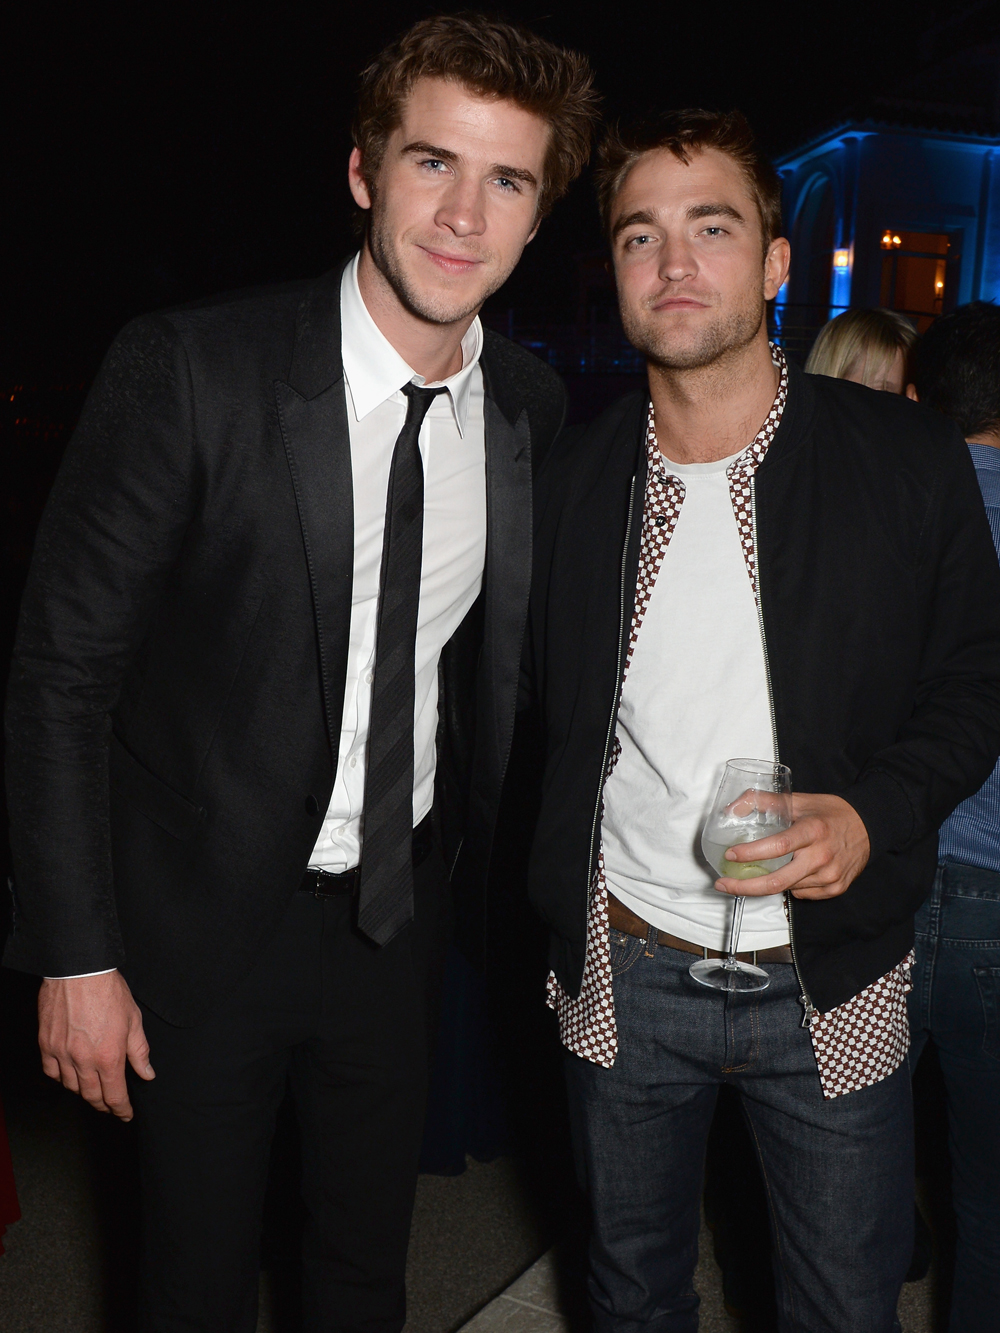 Giorgio Armani + Vanity Fair Celebrate Cannes with Robert Pattinson, Adrian Grenier + More